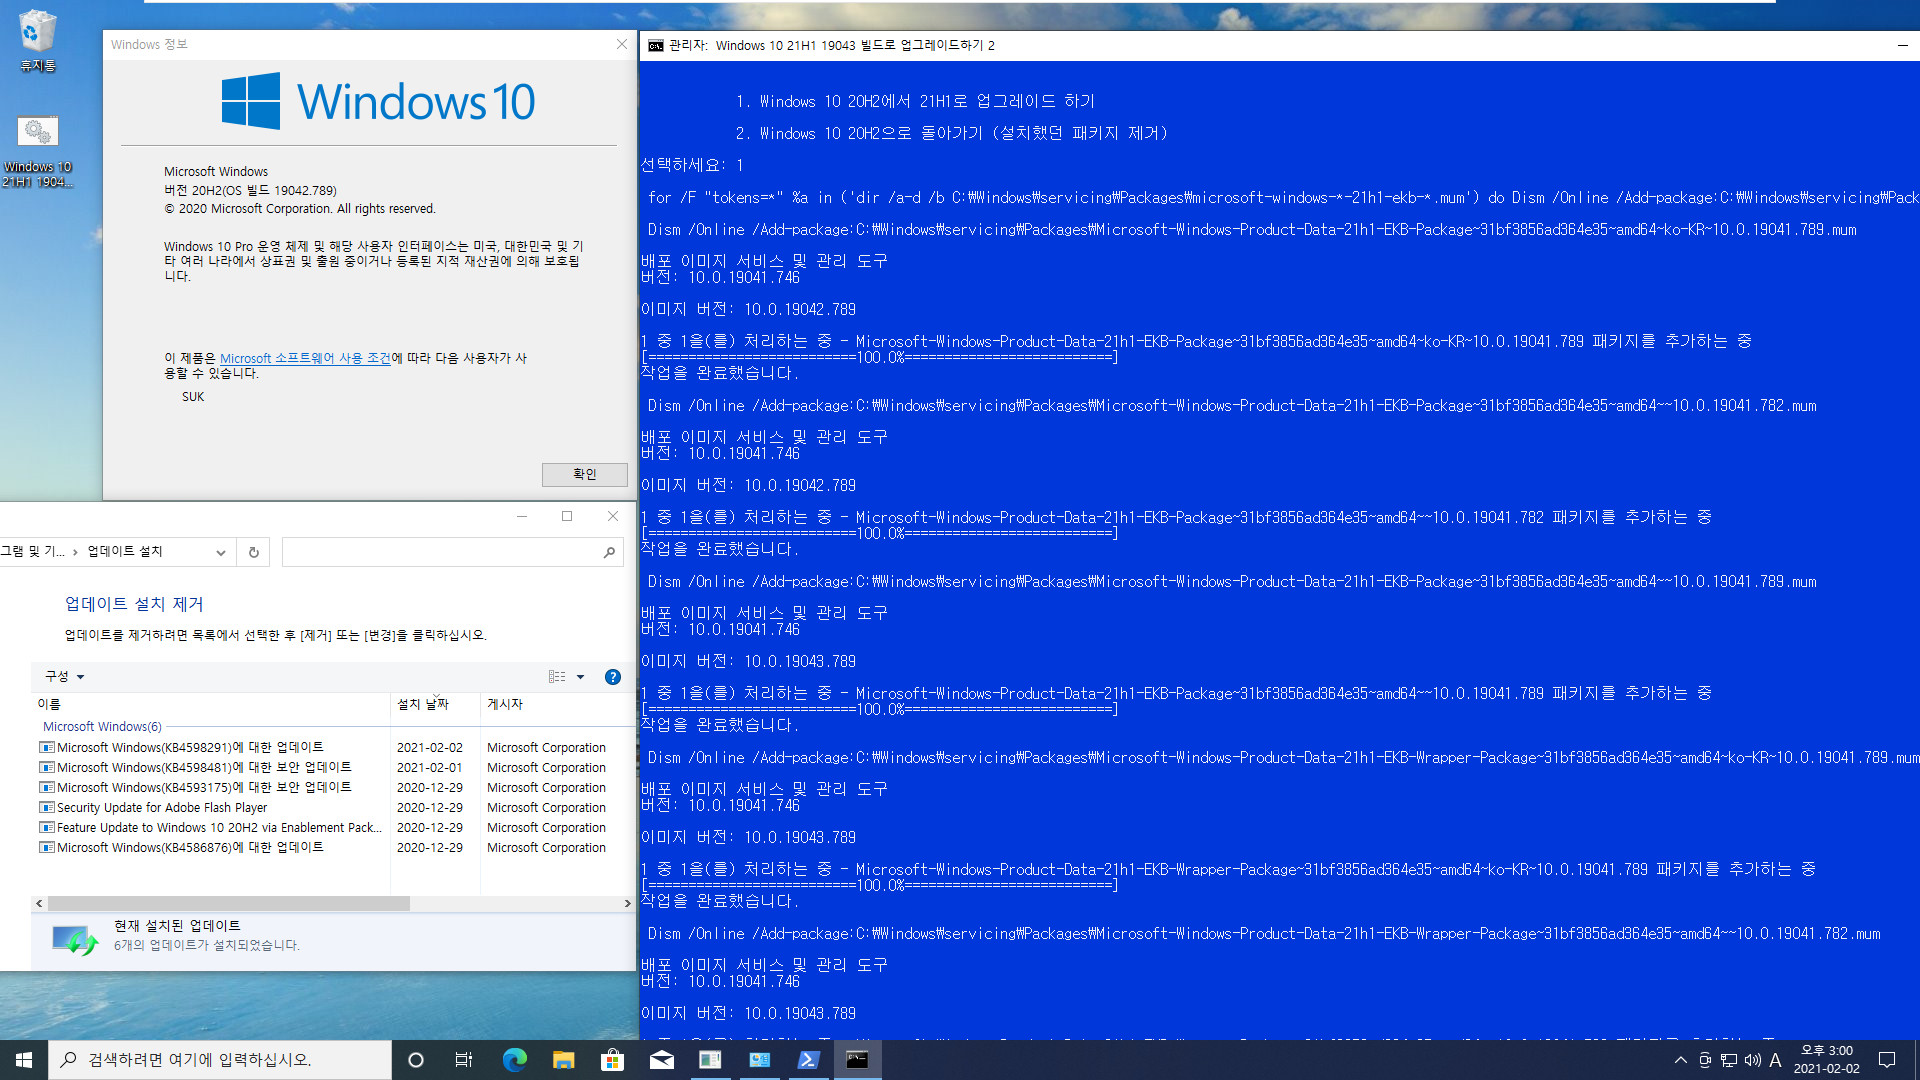 Windows 10 21H1 19043 빌드로 업그레이드하기2.bat 테스트 - 21H1 업그레이드 후에 새 누적 업데이트 설치하려면, 21H1 제거한 후에 새 누적 업데이트 설치해야 하네요 2021-02-02_150040.jpg